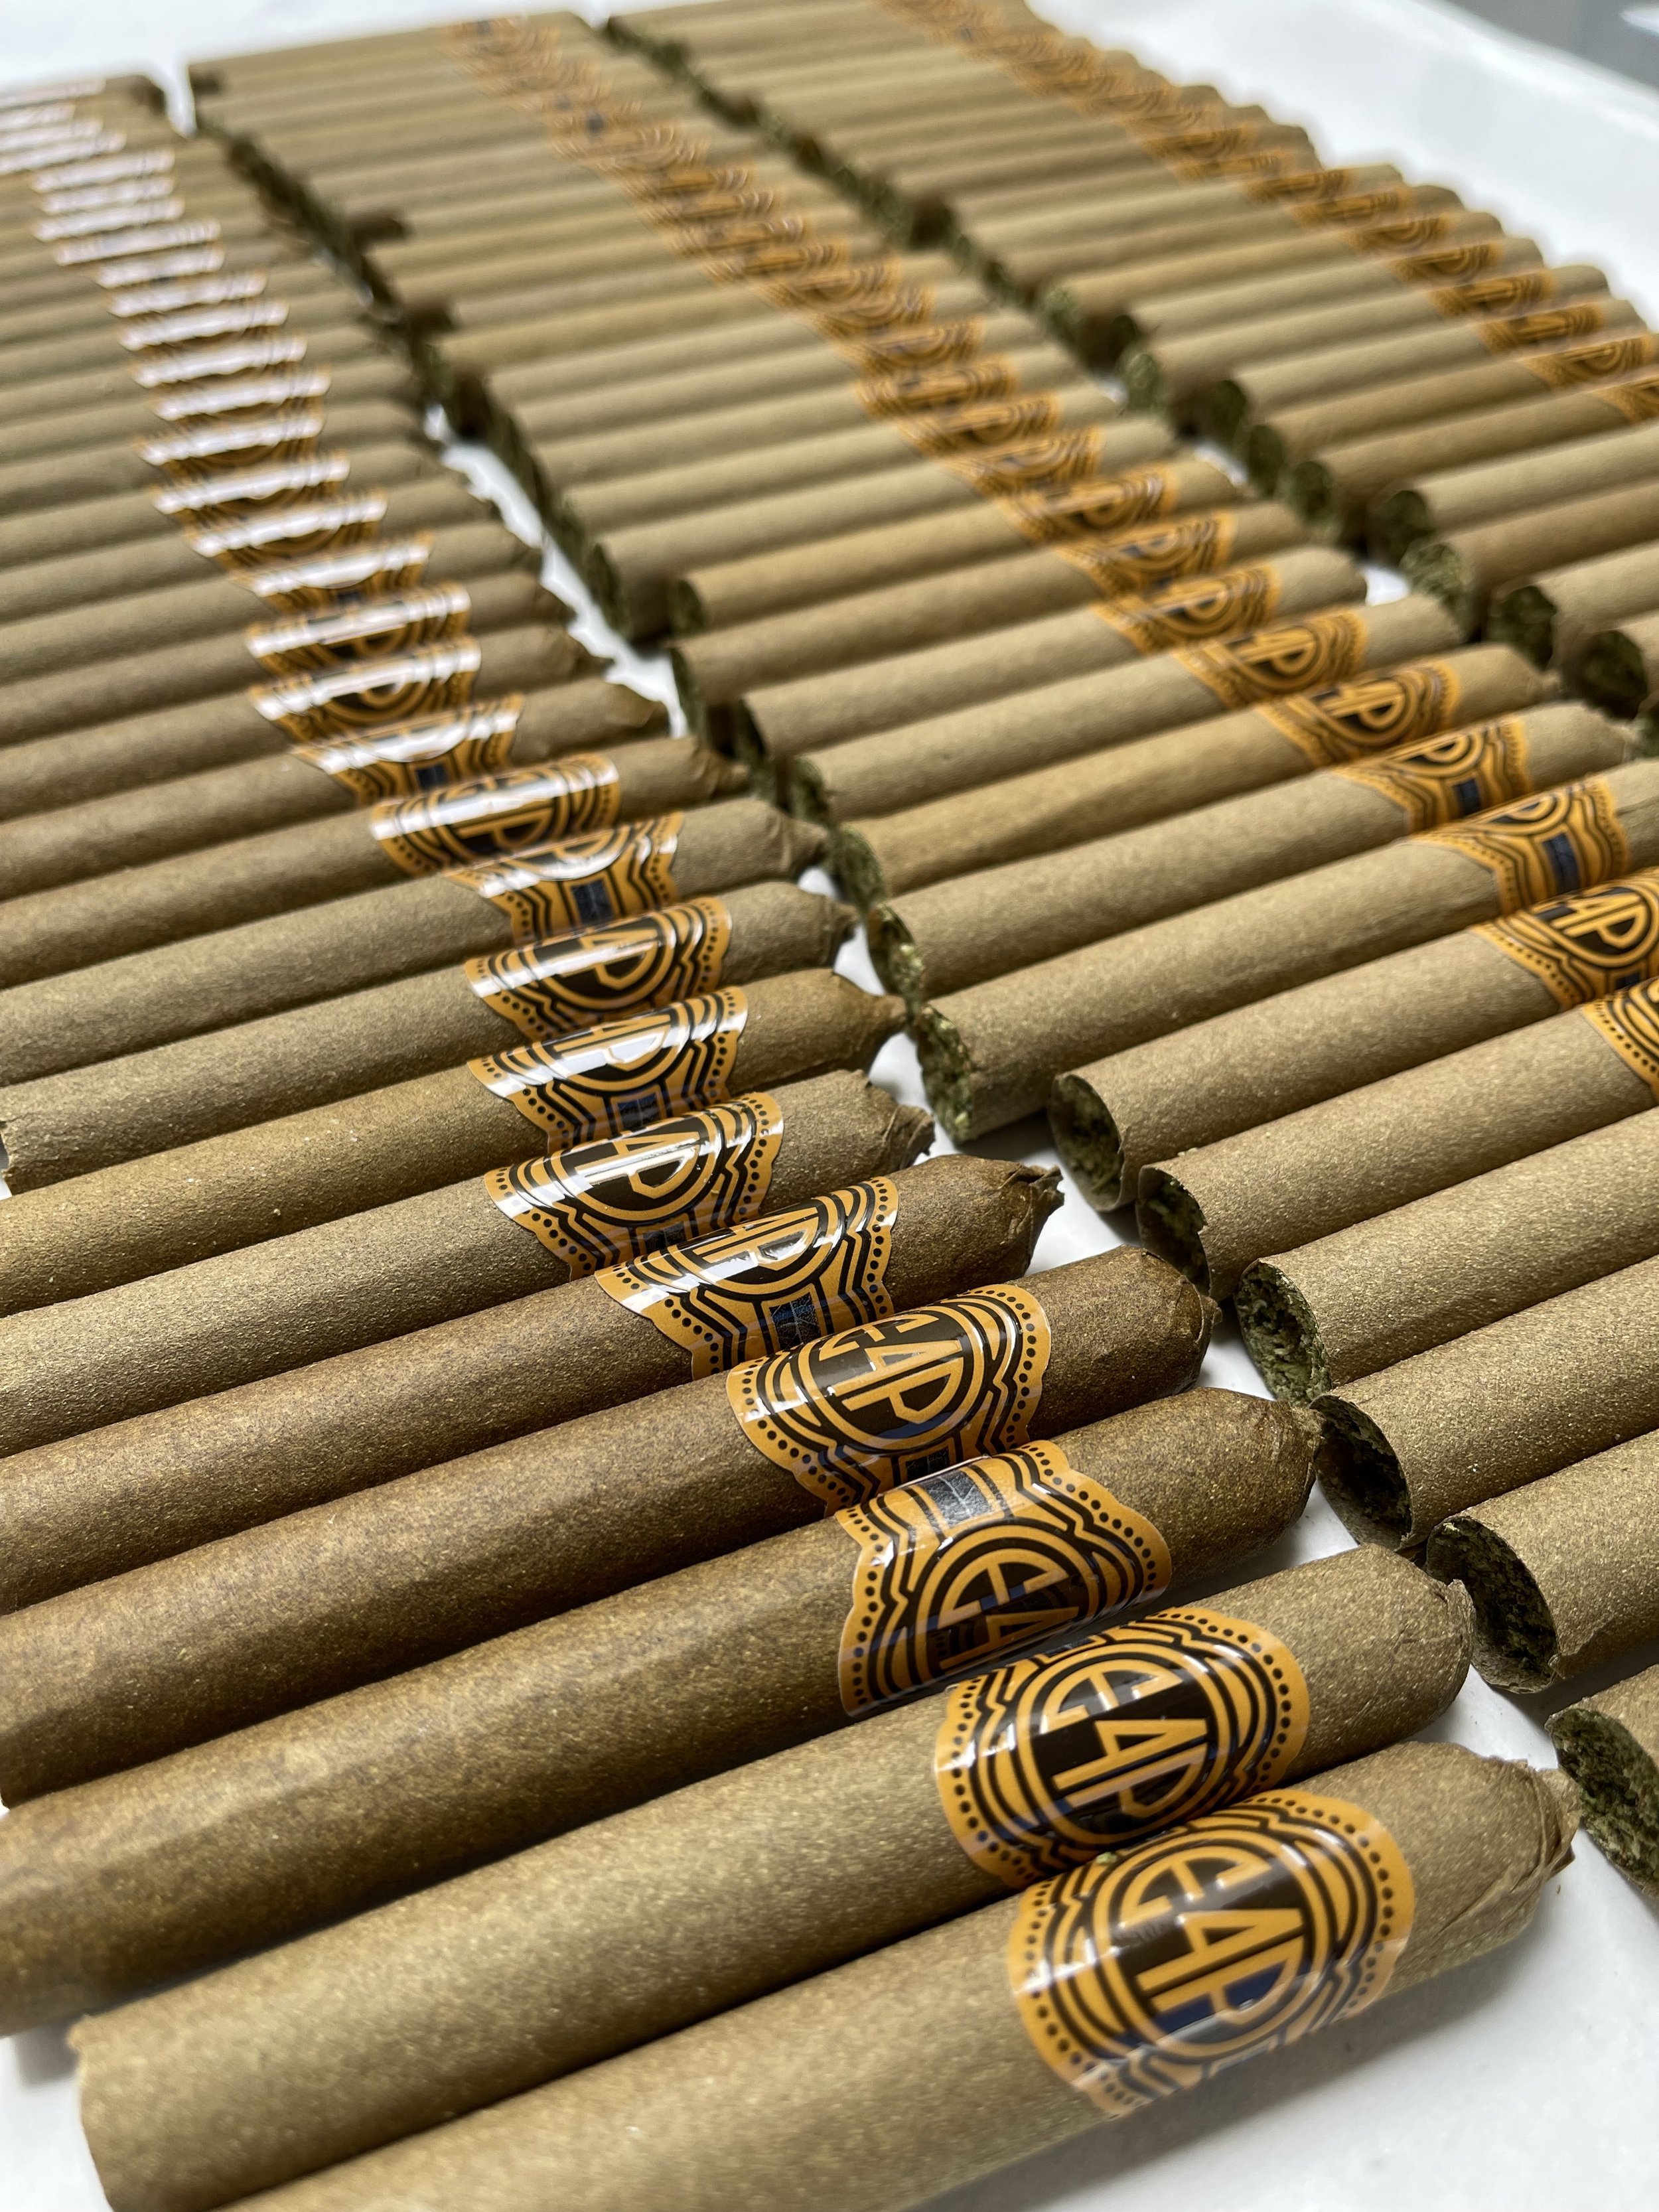 Blunt Cigar Manufacturing.jpeg